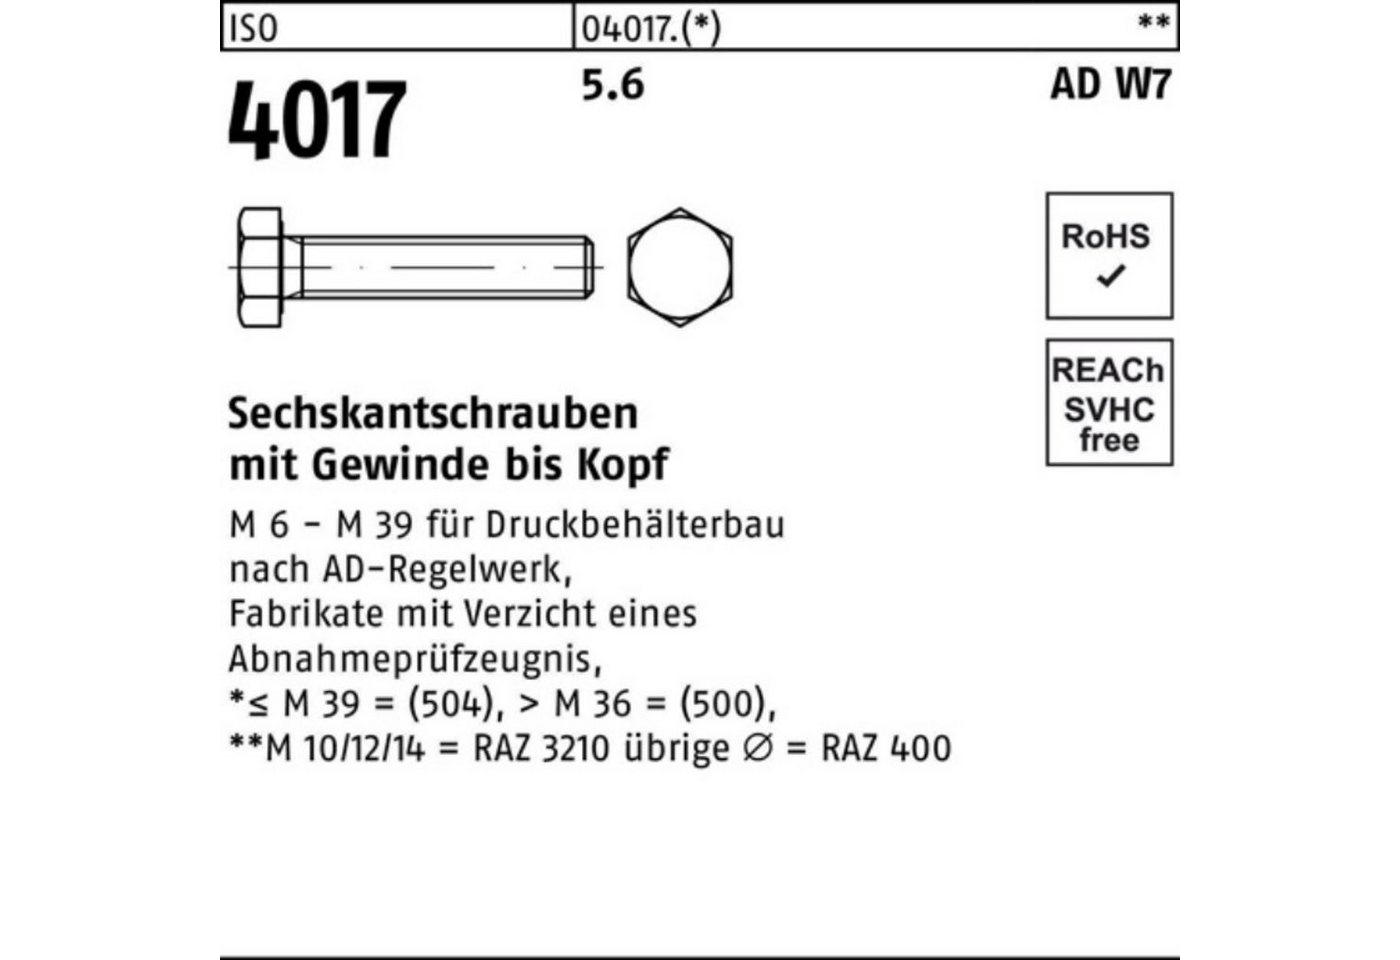 Bufab Sechskantschraube 200er Pack Sechskantschraube ISO 4017 VG M8x 20 5.6 AD W7 200 Stück I von Bufab